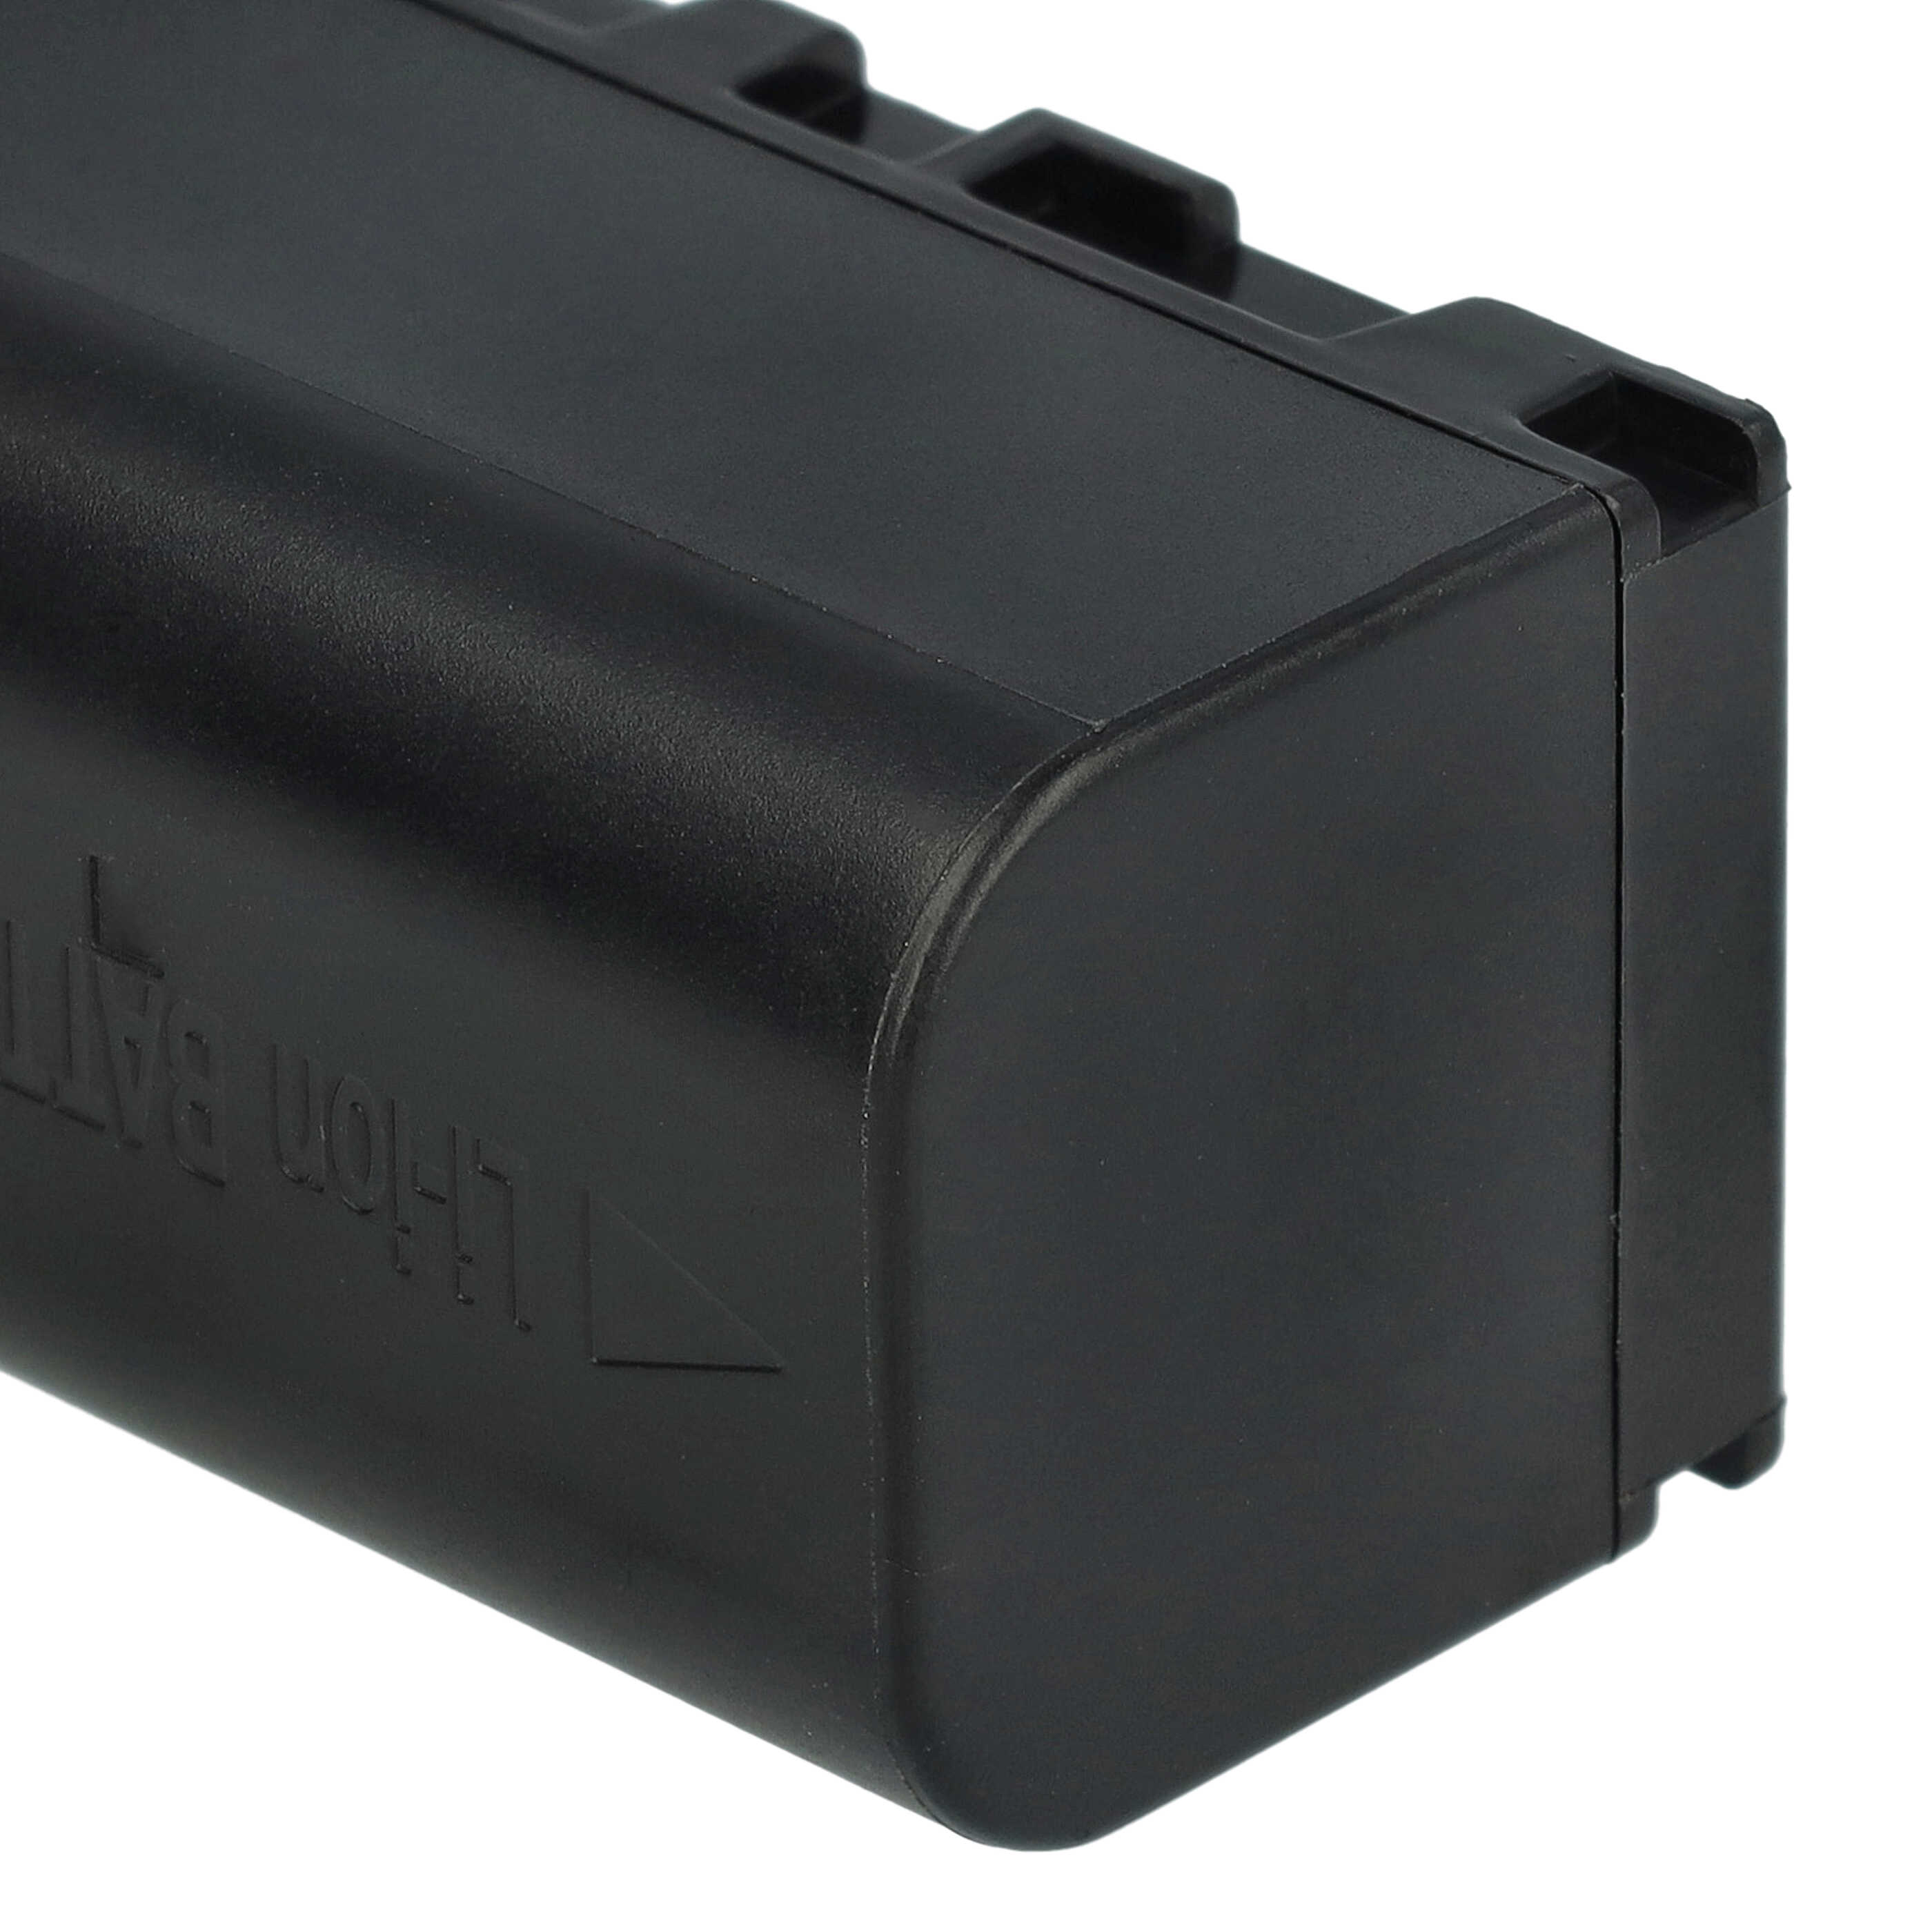 Videocamera Battery Replacement for JVC BN-VF815, BN-VF815U, BN-VF808, BN-VF808U - 1400mAh 7.2V Li-Ion